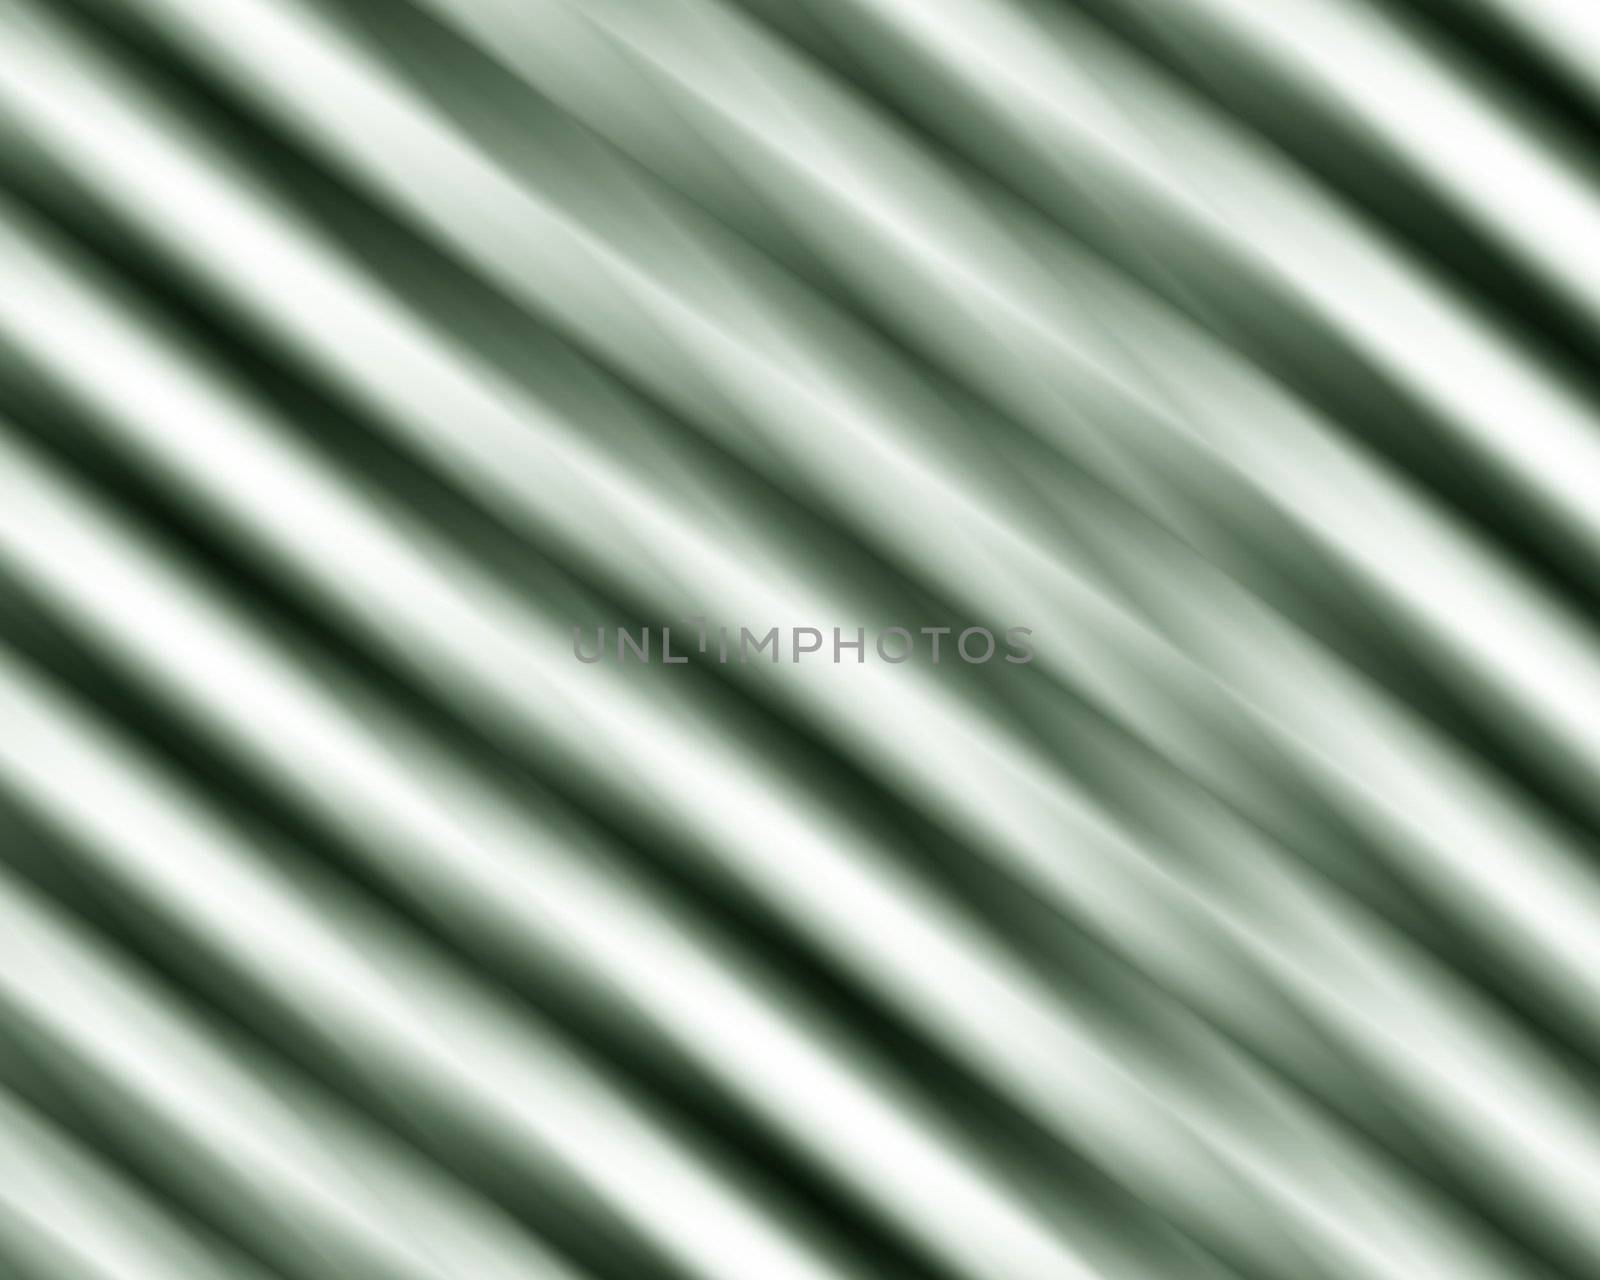 greeenish metallic background with diagonal stripes